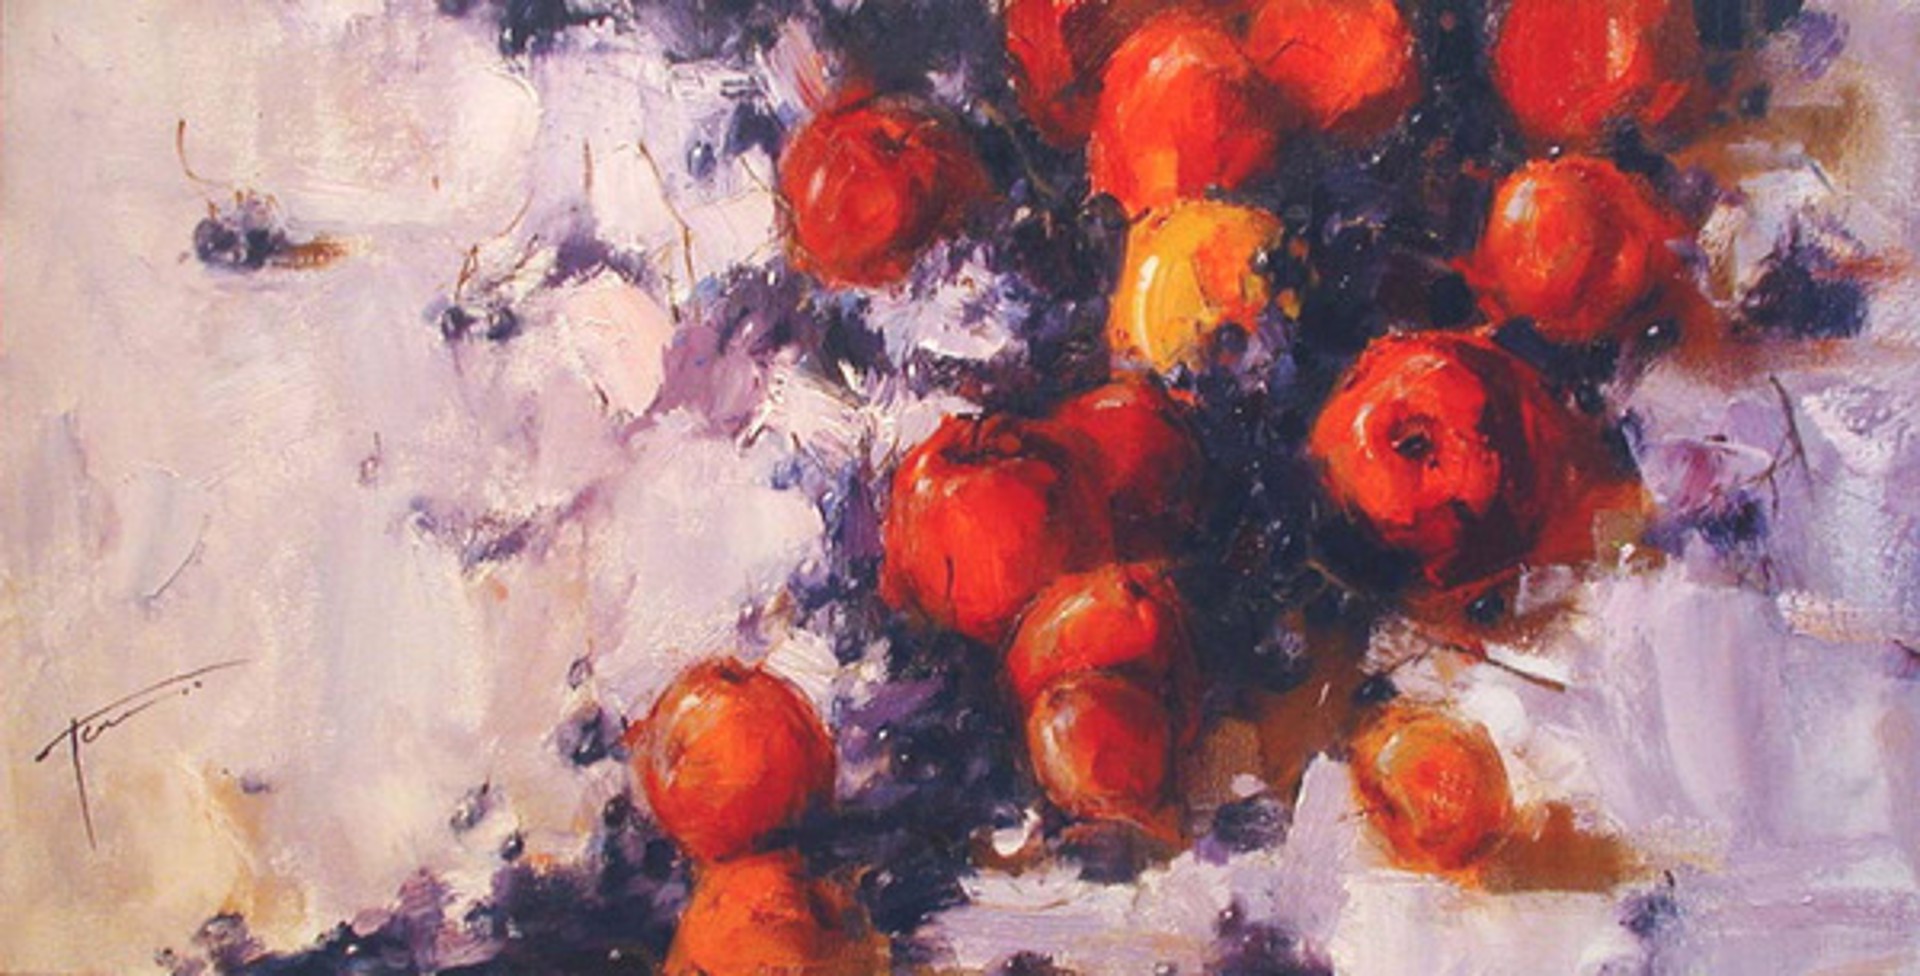 Apples and Berries by Yana Golubyatnikova